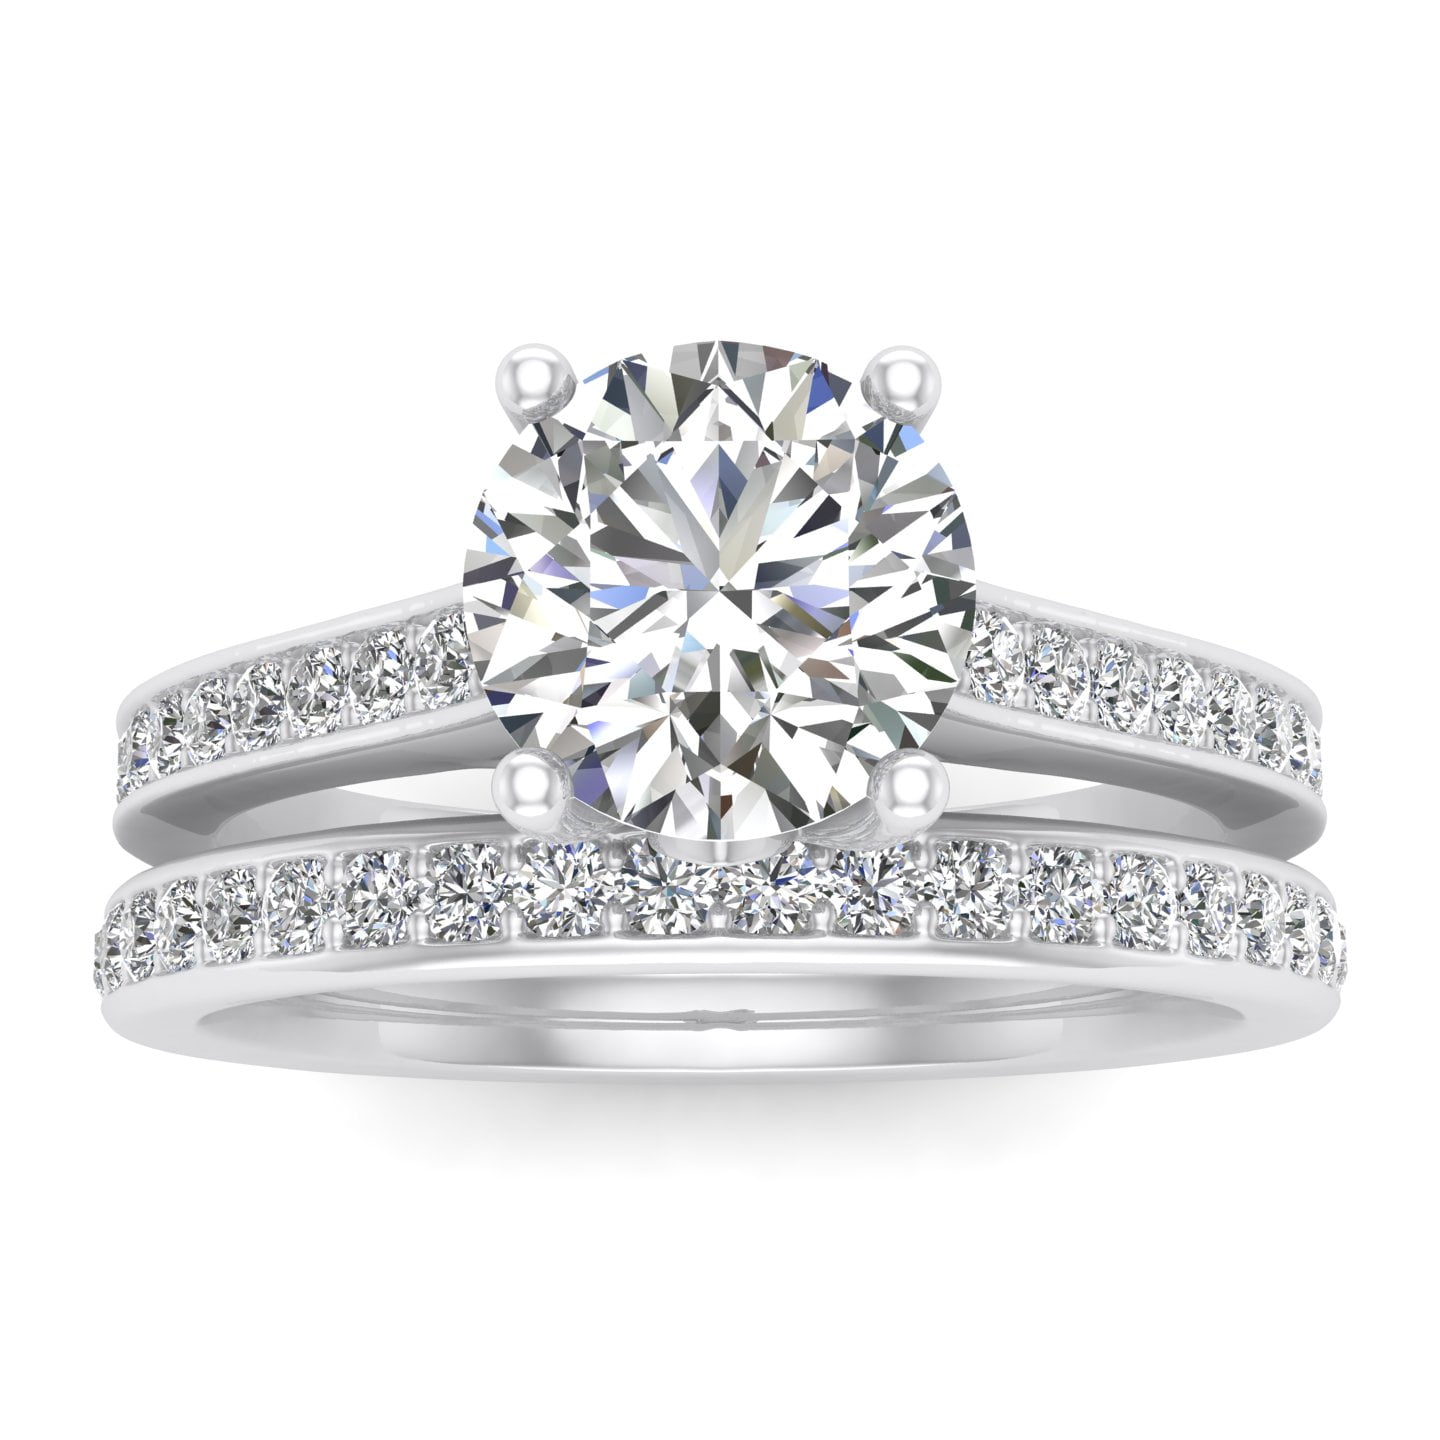 Inara Diamonds 7 8 Carat Tw Natural Round Diamond Bridal Set Engagement Ring In 10k White Gold G H I2 I3 7 8ctw Walmart Com Walmart Com